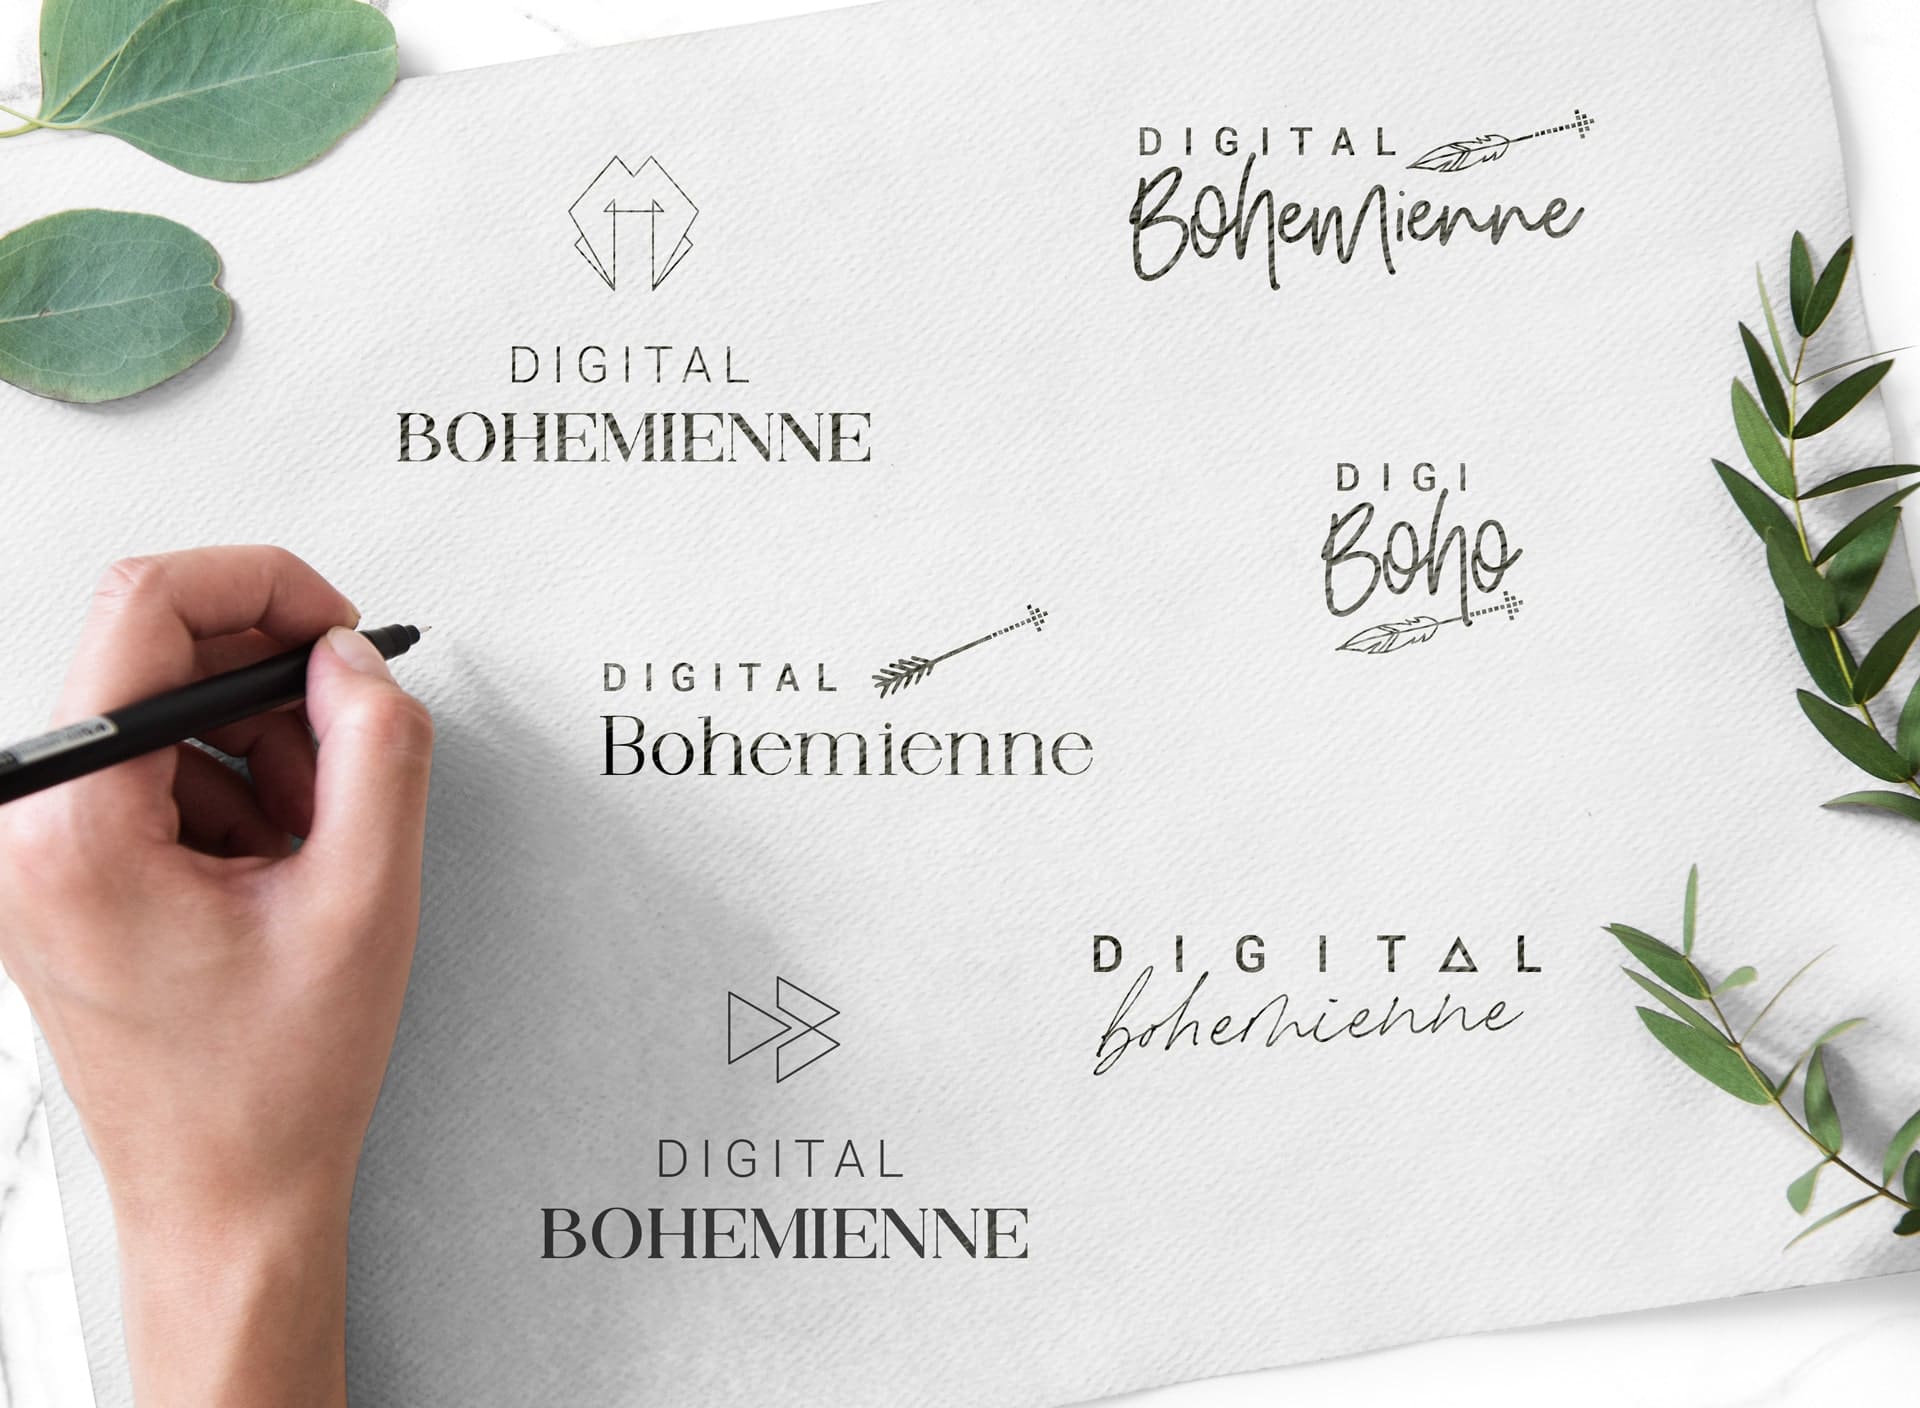 Digital Bohemienne Logodesign Alternativen